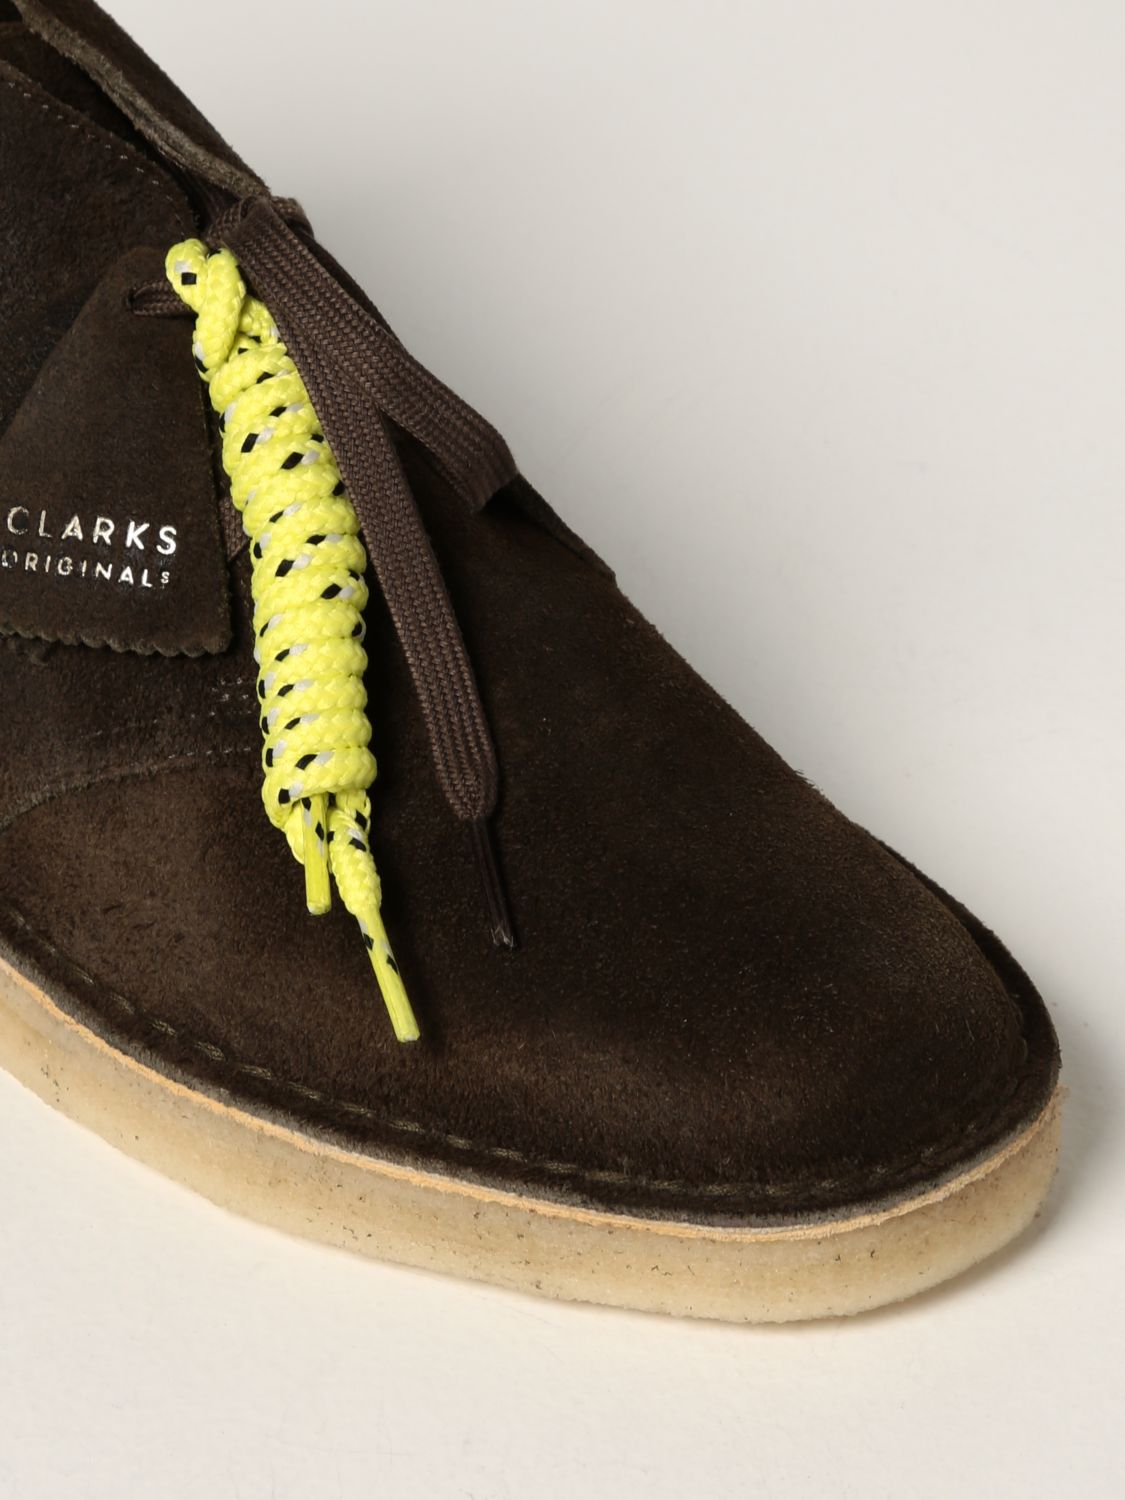 Desert boots Clarks: Shoes men Clarks Originals olive 4